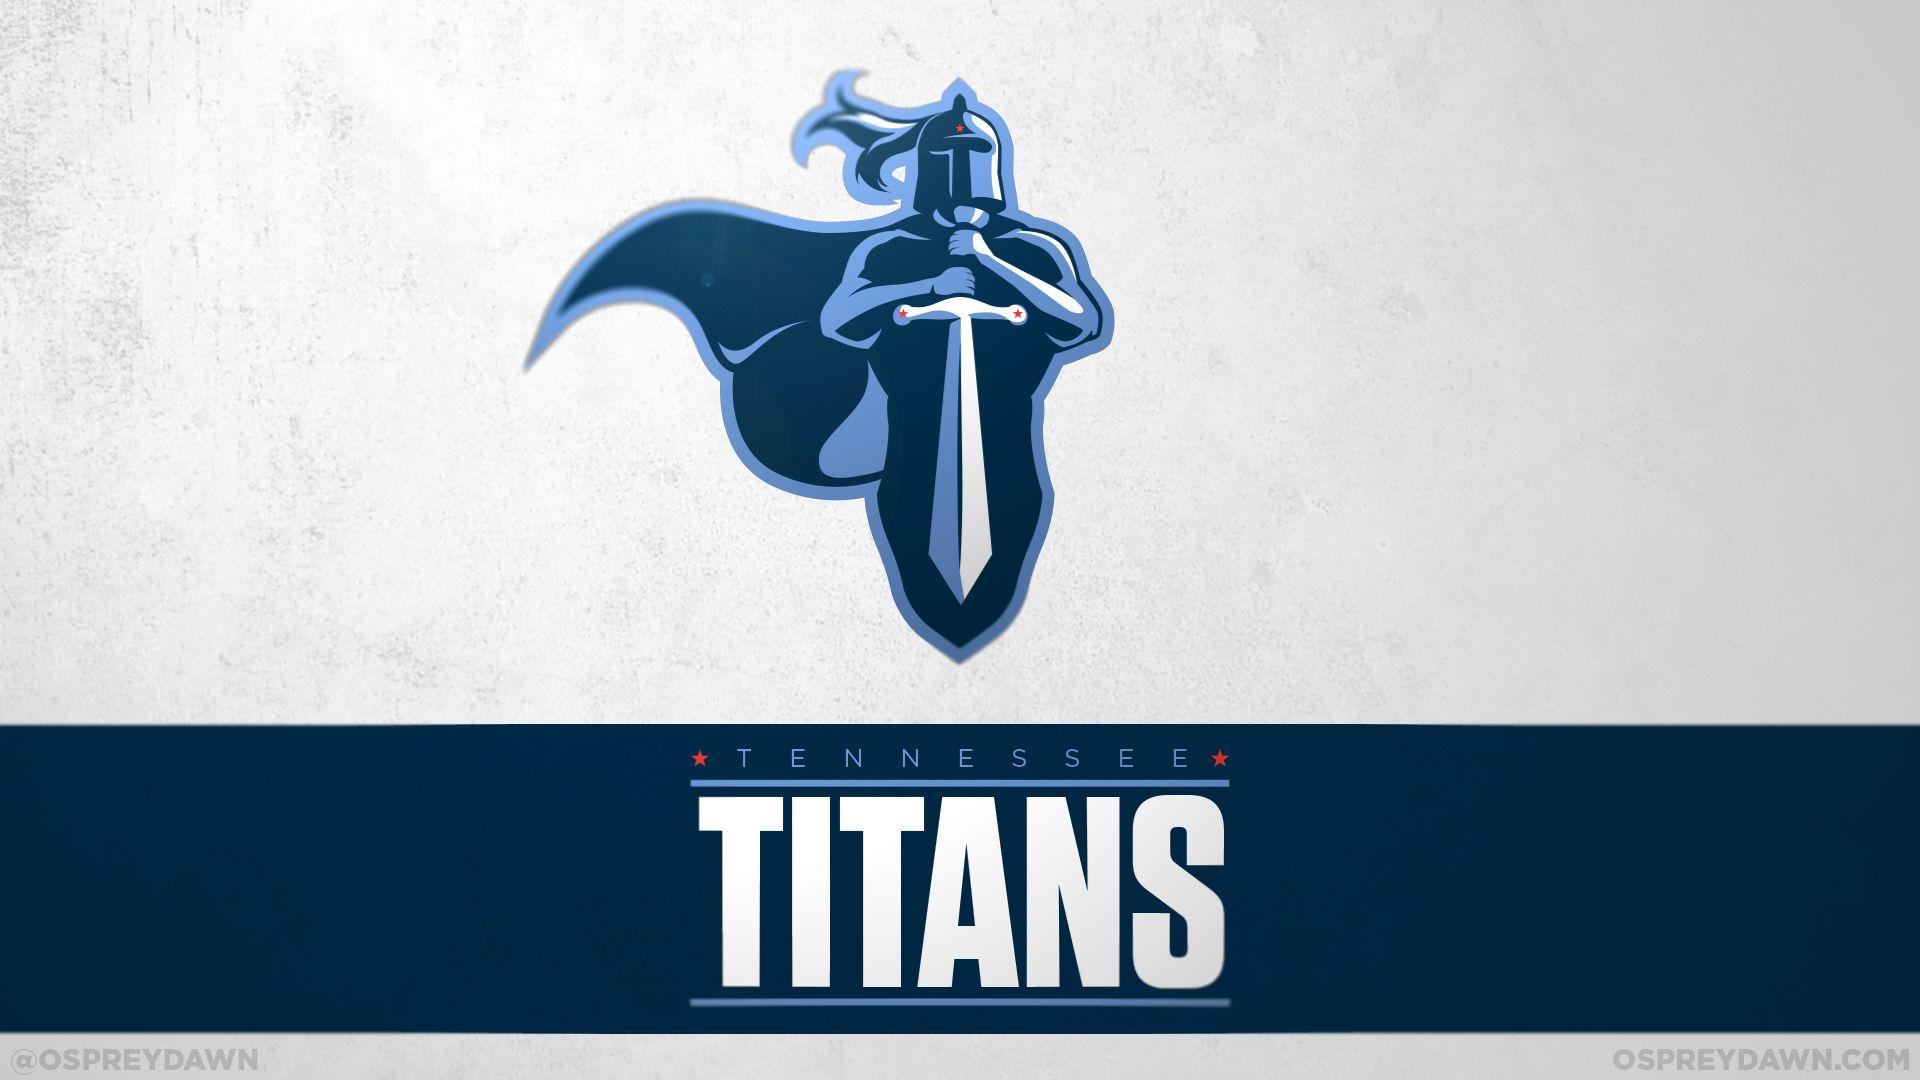 Titans Logo - The Tennessee Titans